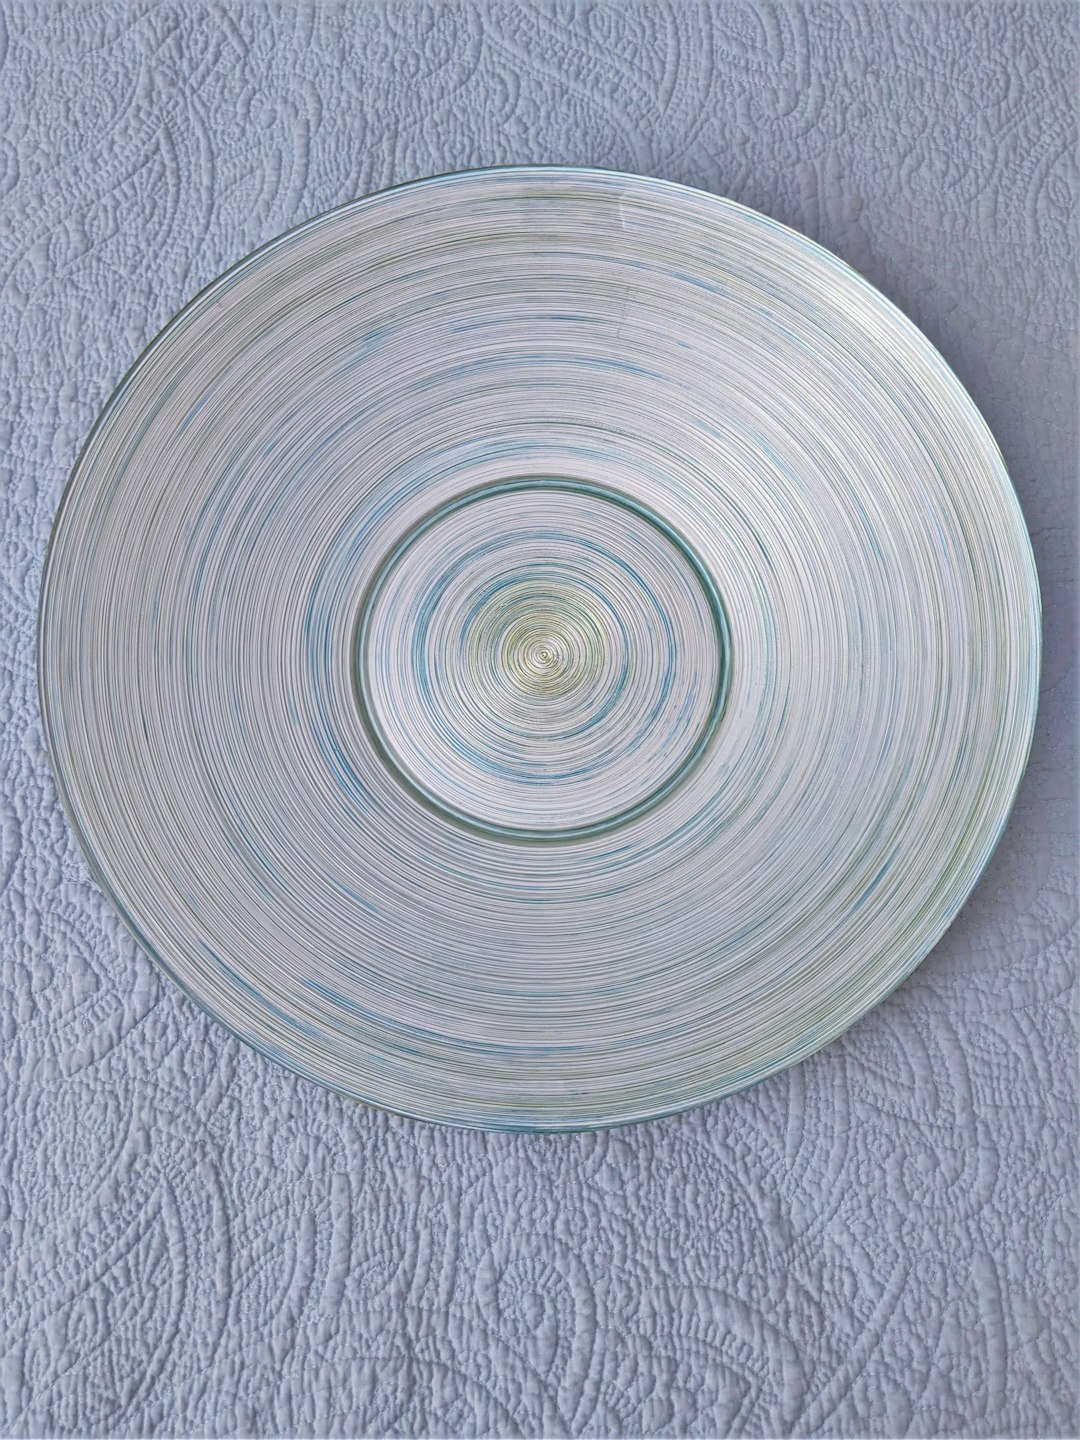 round blue light on gray textile